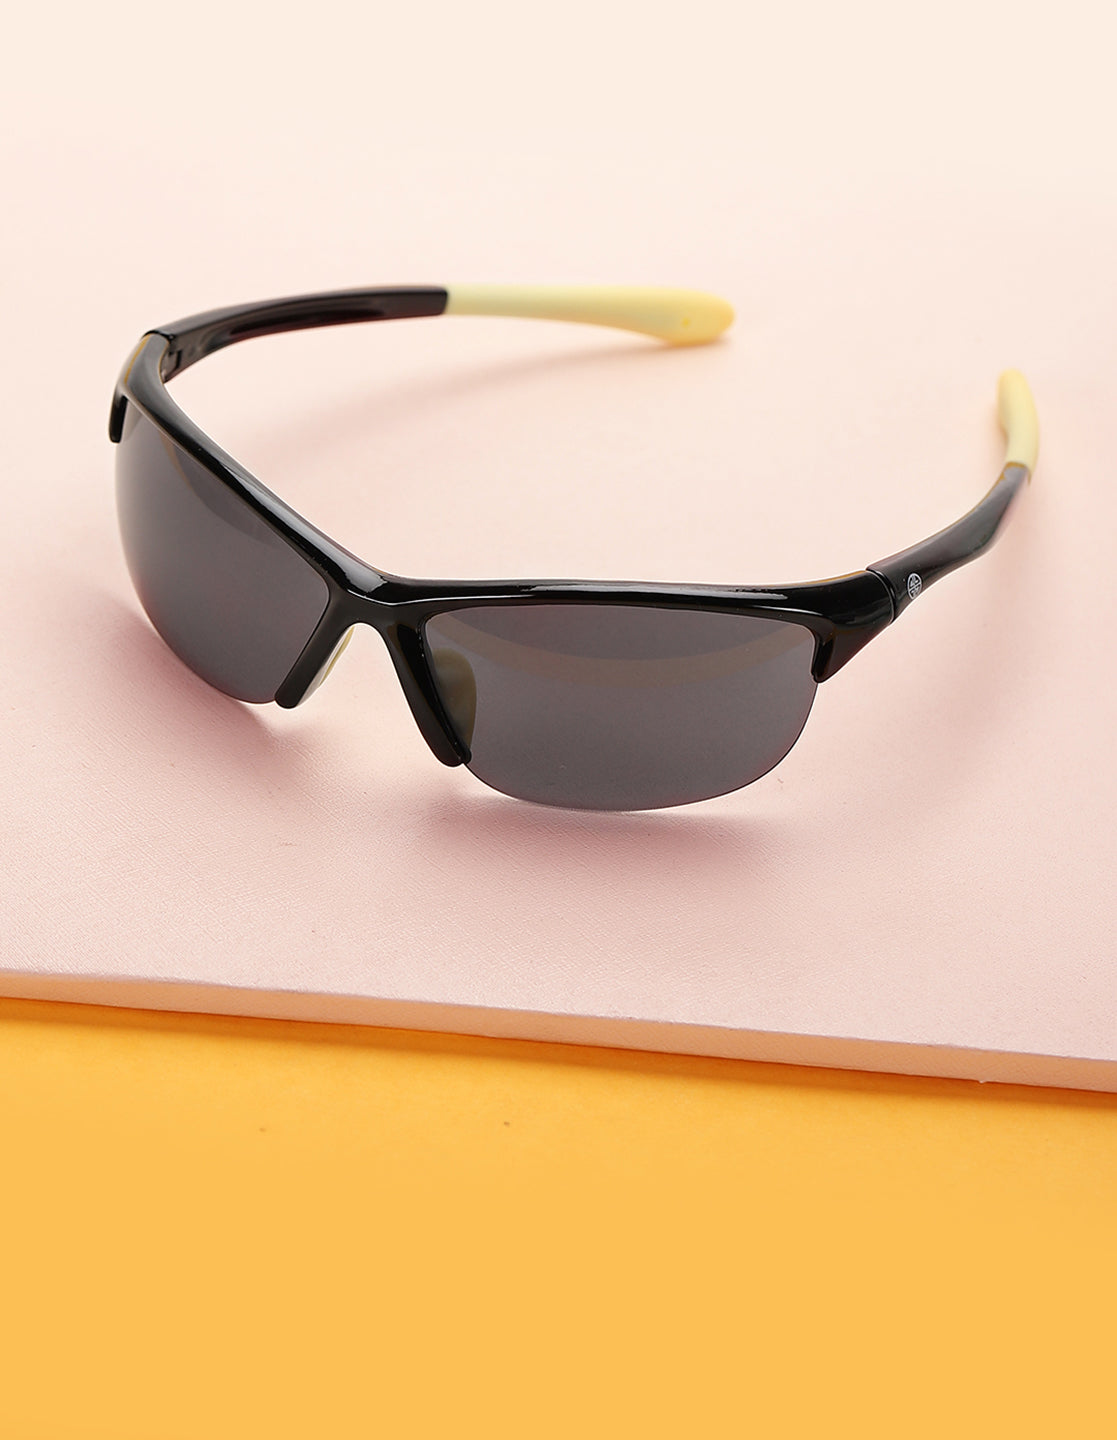 Carlton London Black Lens & Black Sports Sunglasses For Boy